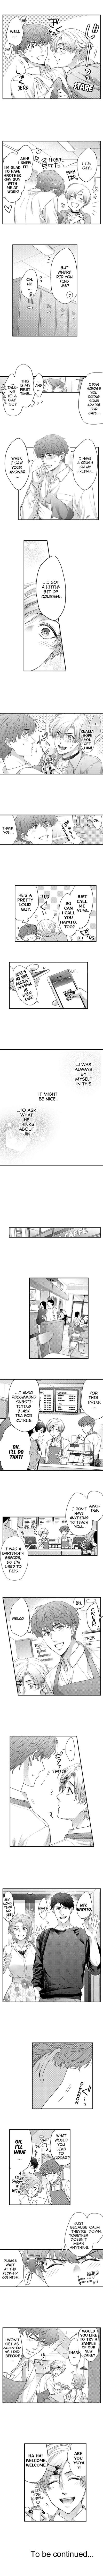 Tomodachi Engagement - Page 2